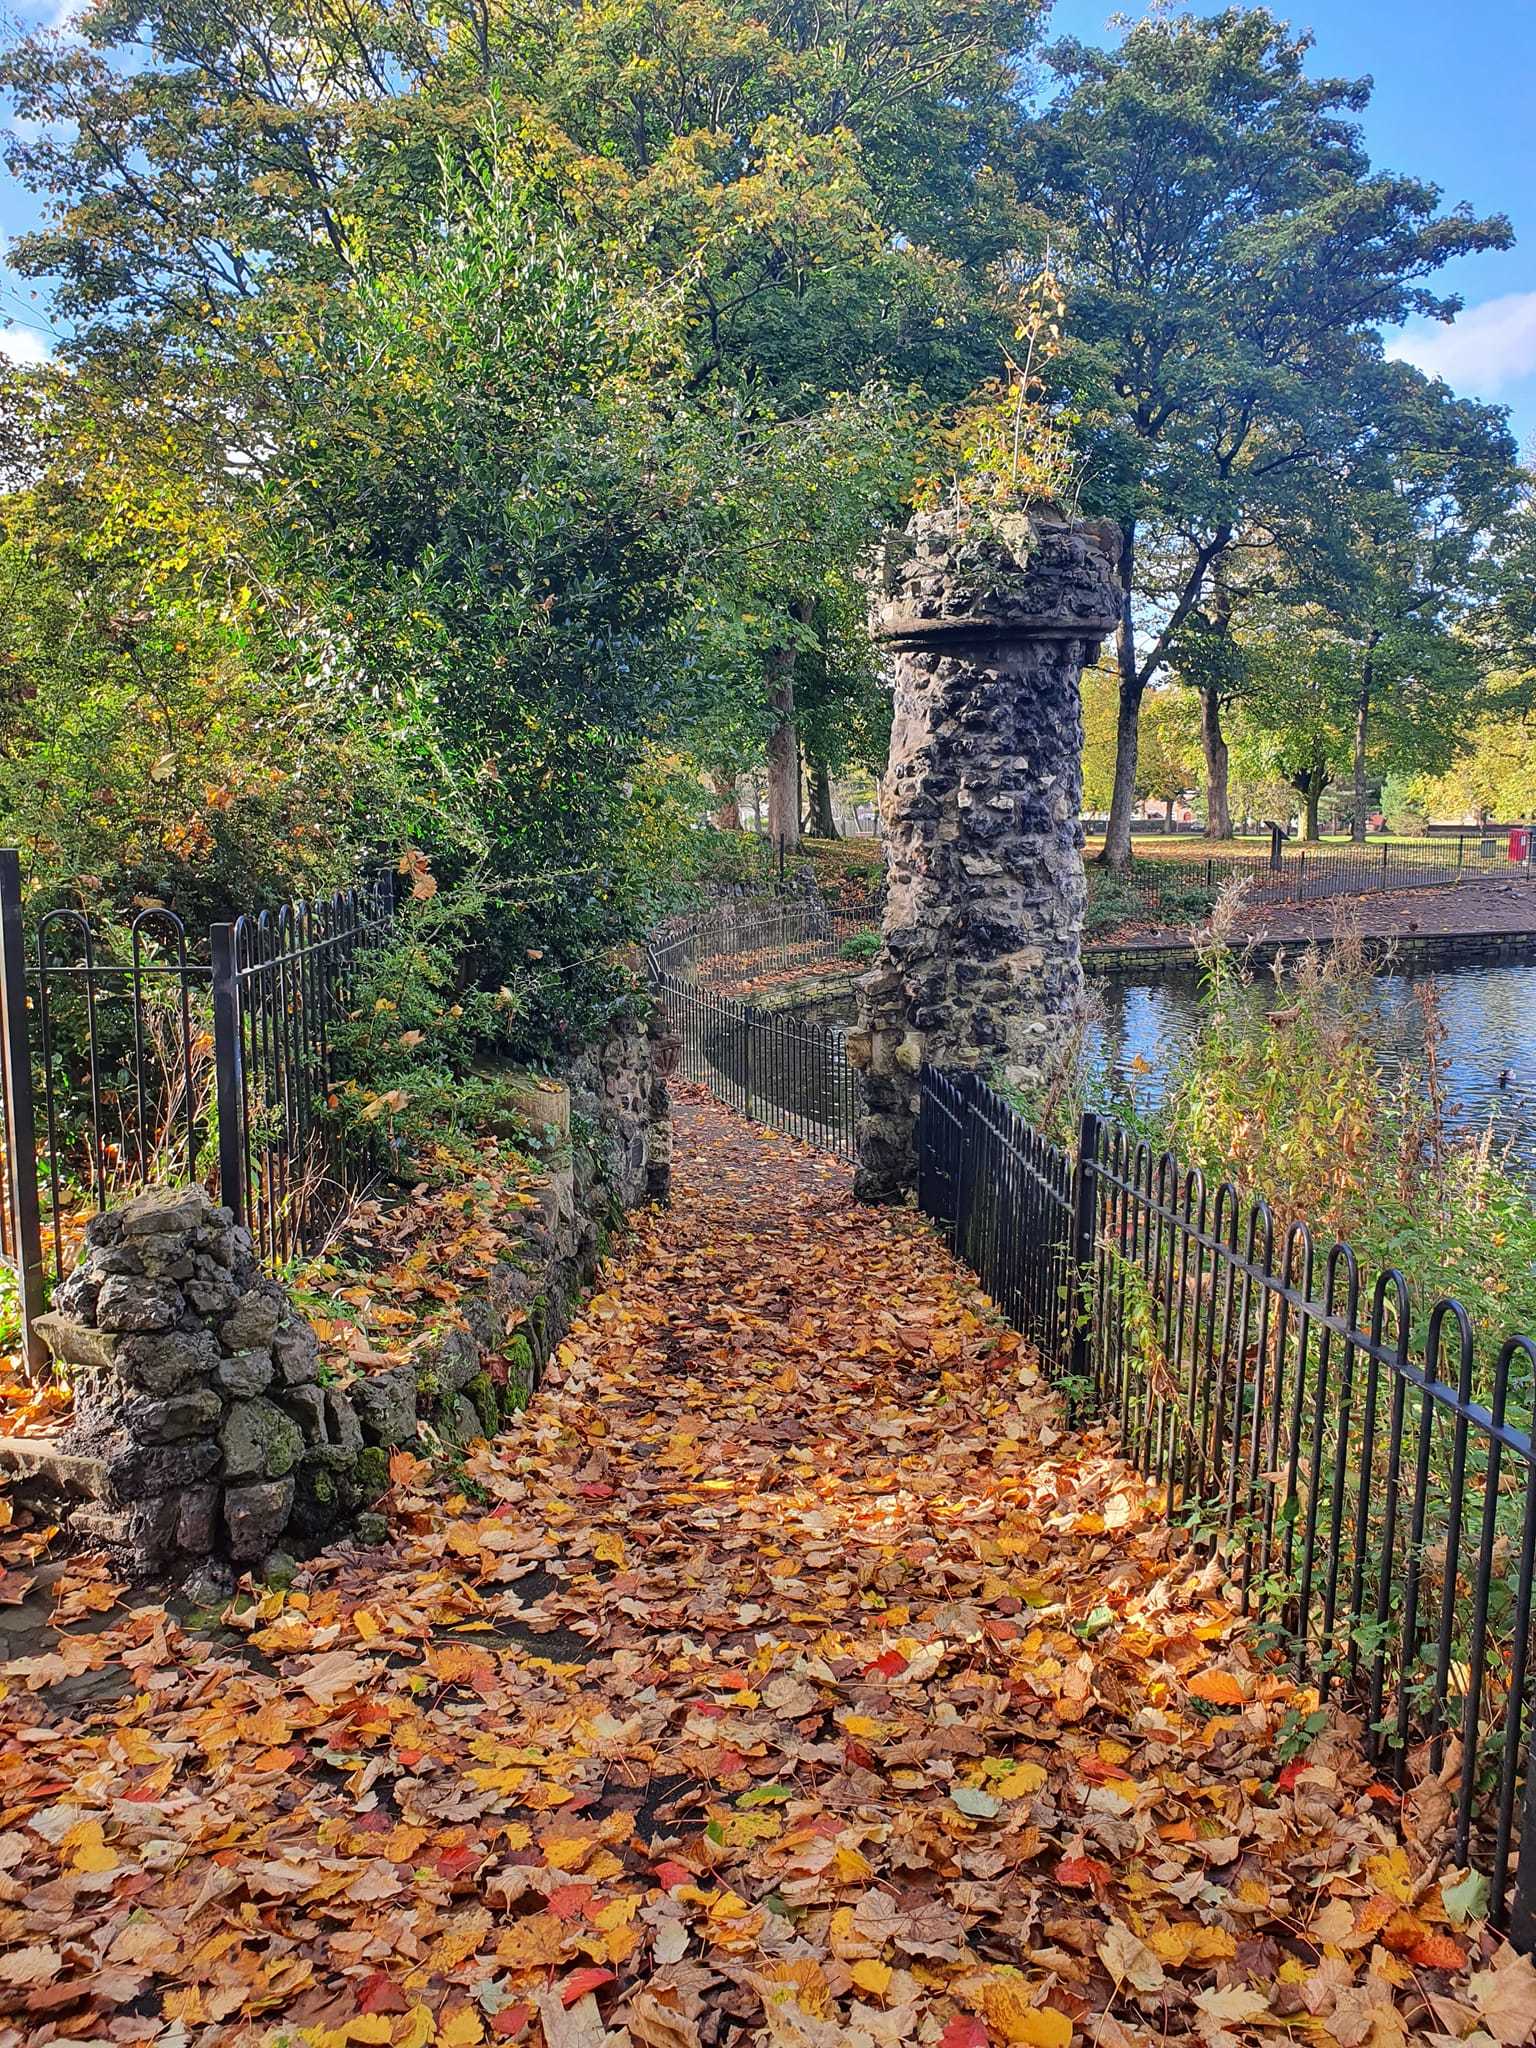 Autumn in Victoria Park by Clare White